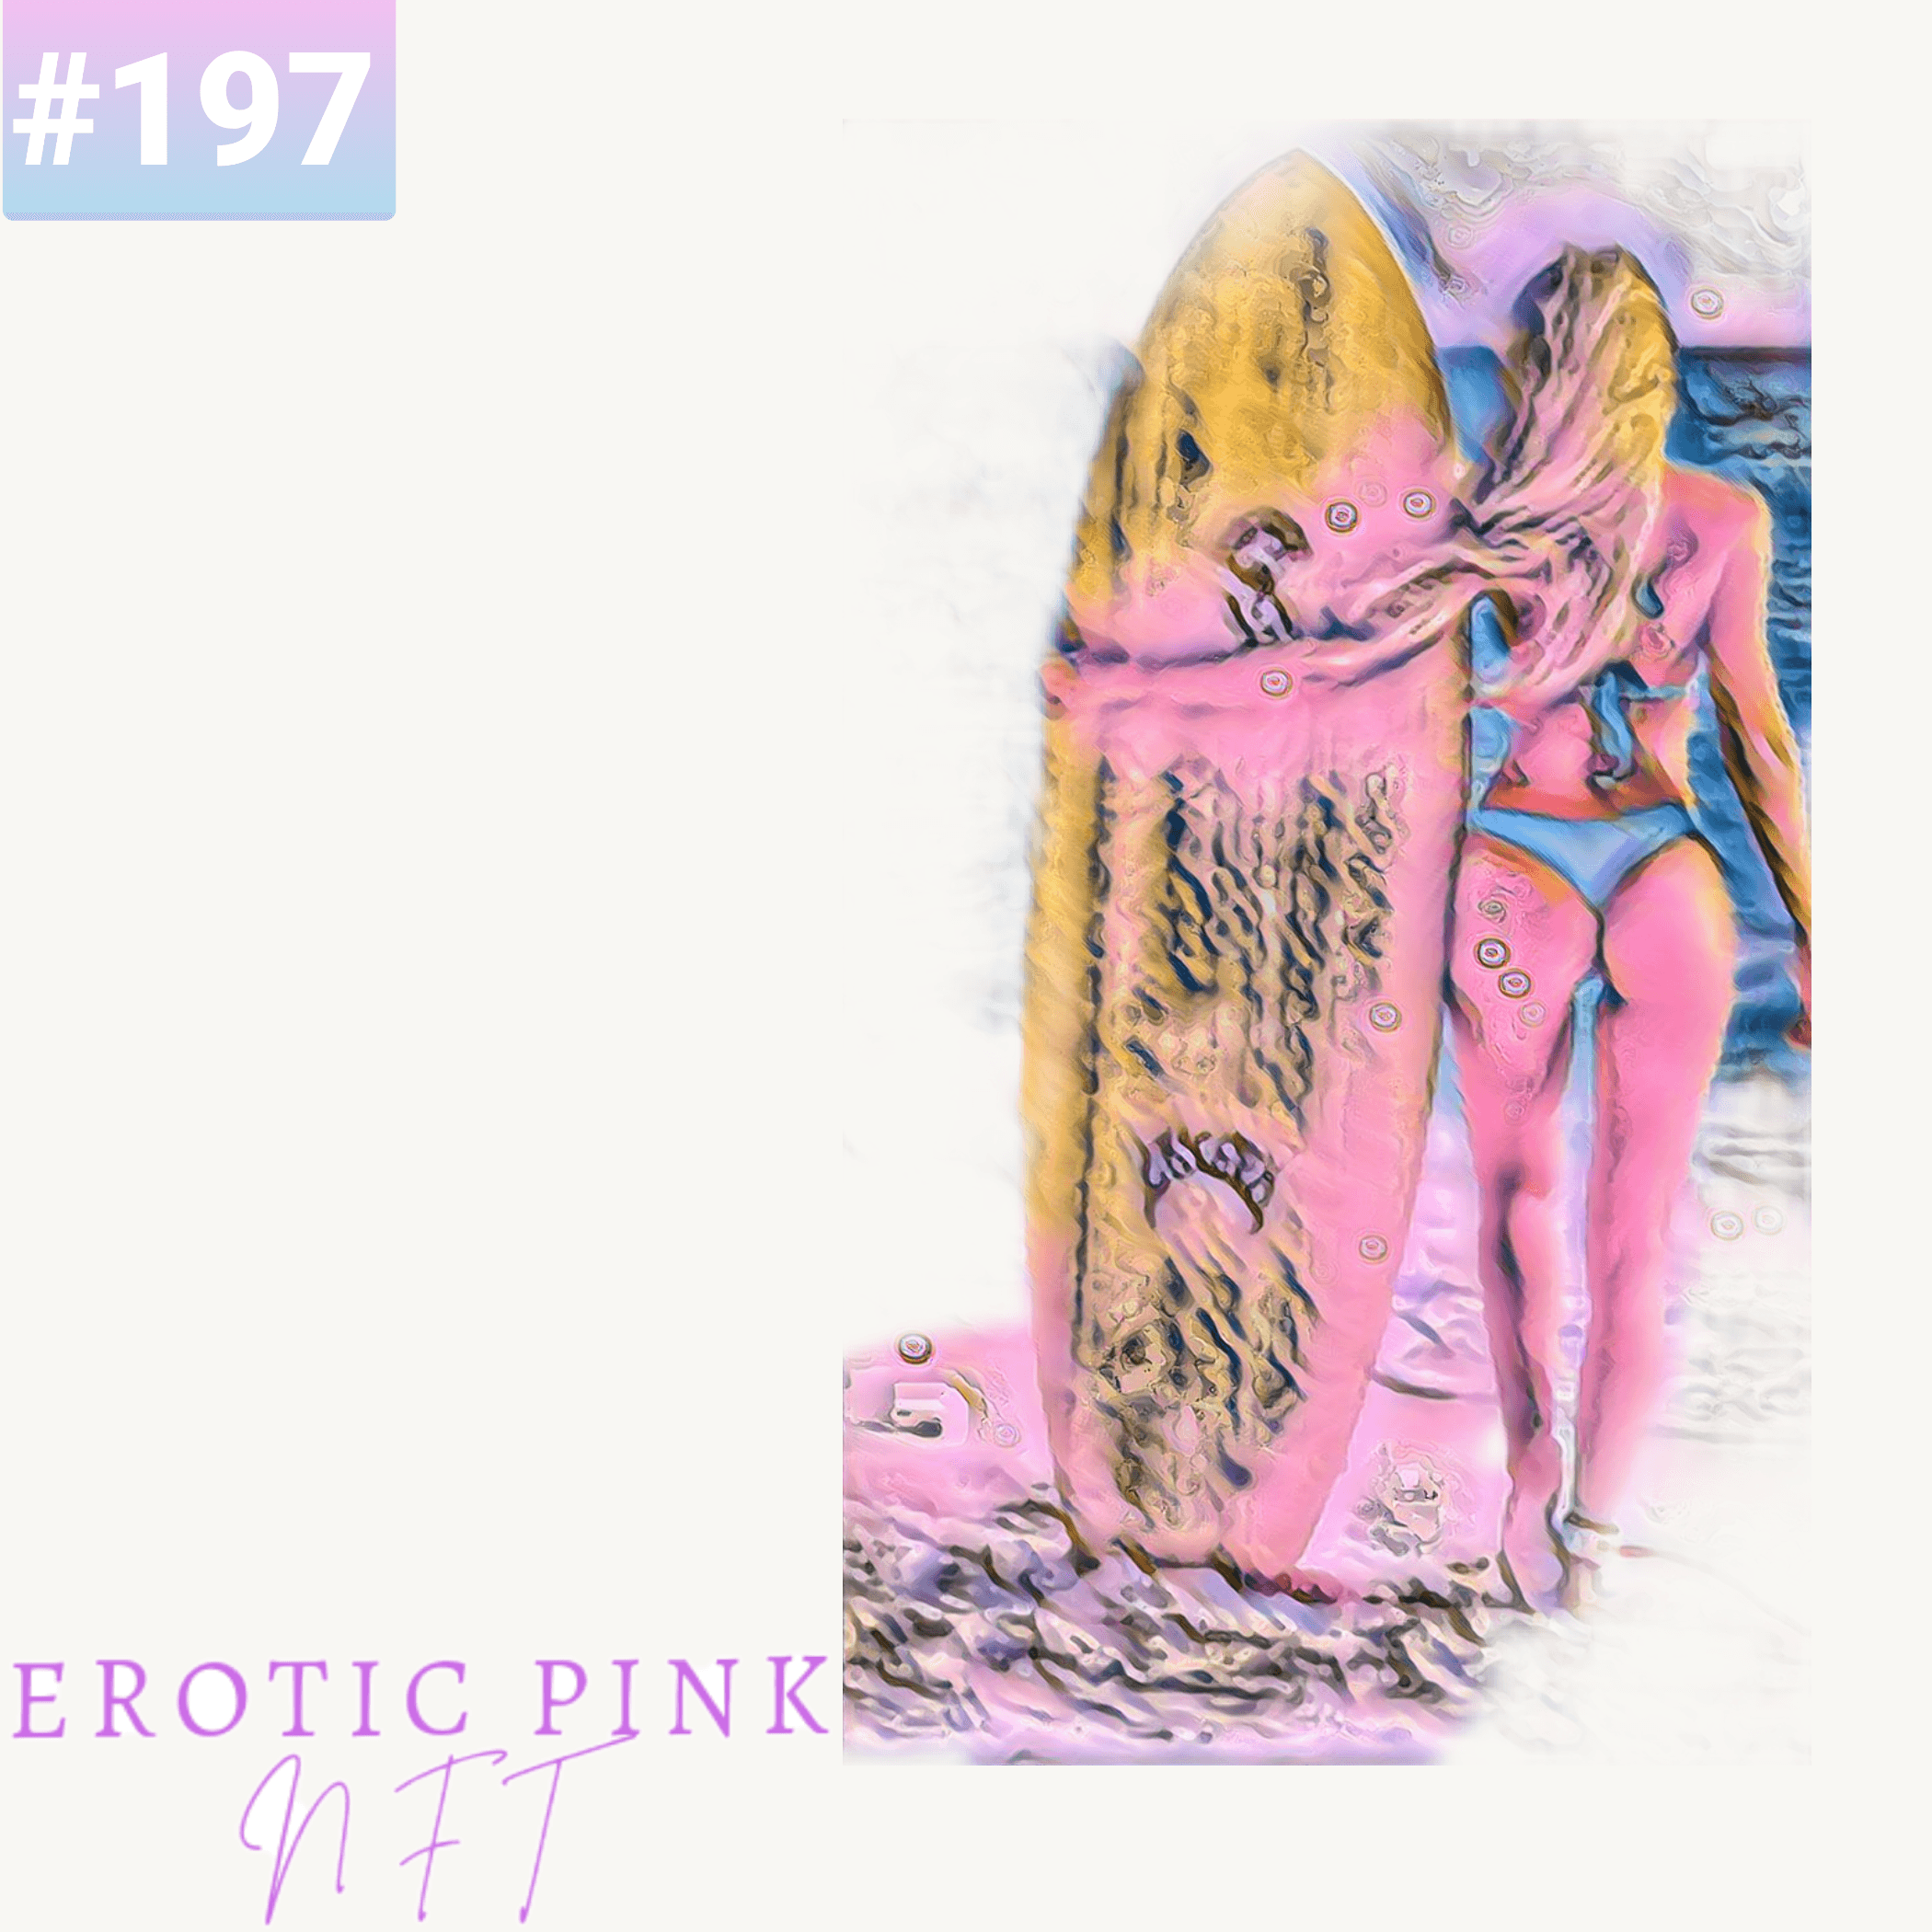 Erotic Pink #197